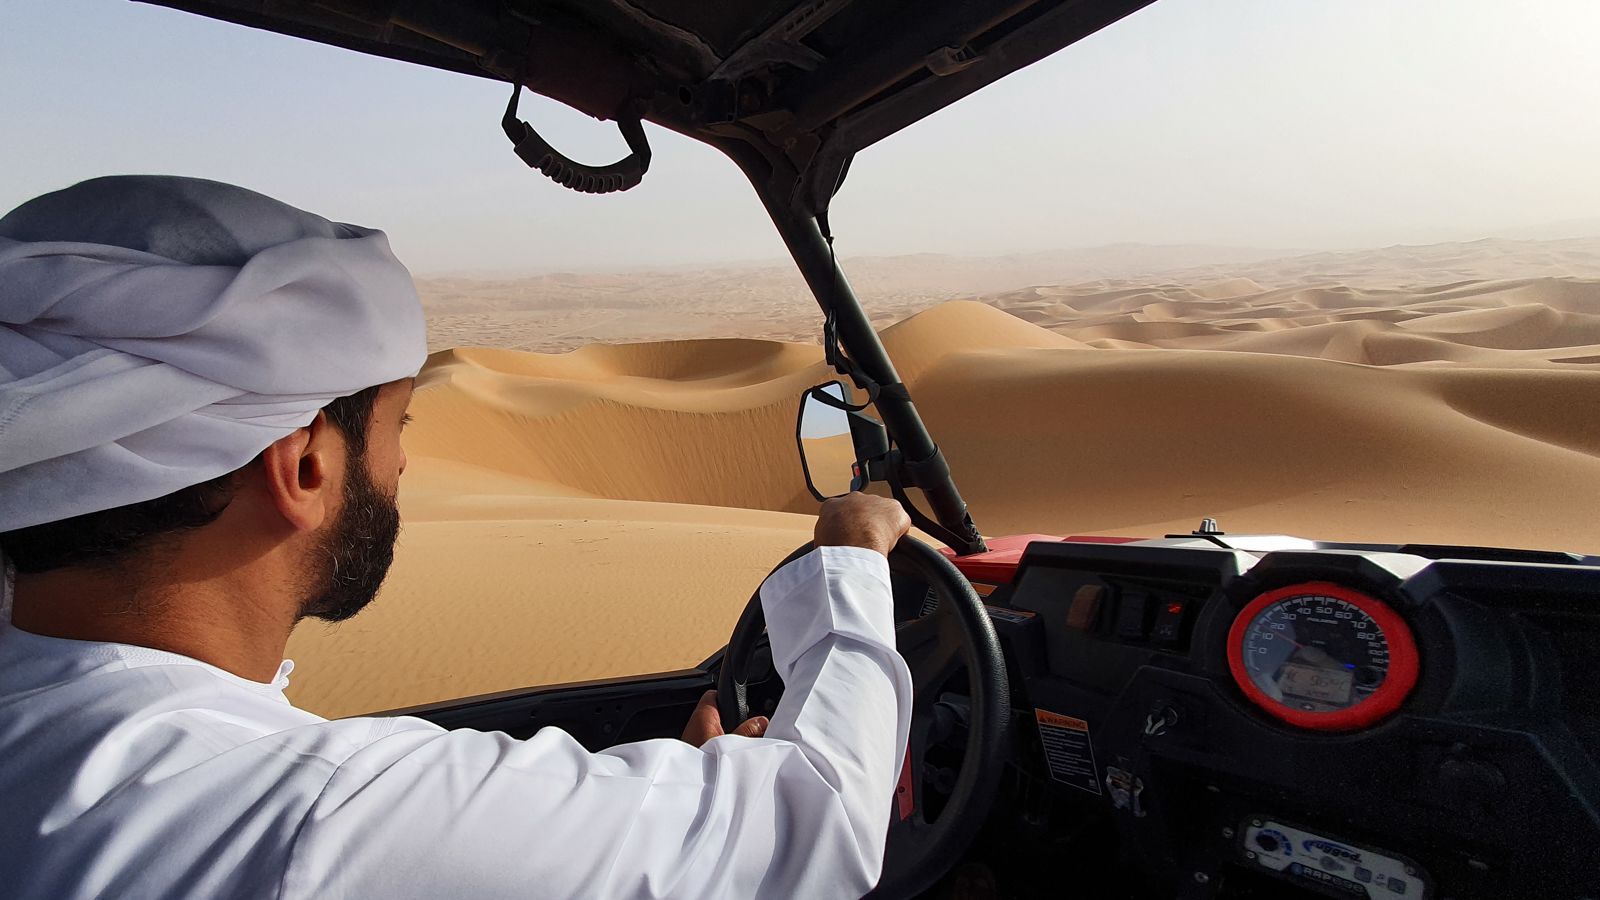 UAE Sand Dunes; Liwa Desert Sand Dune In Abu Dhabi, Dubai